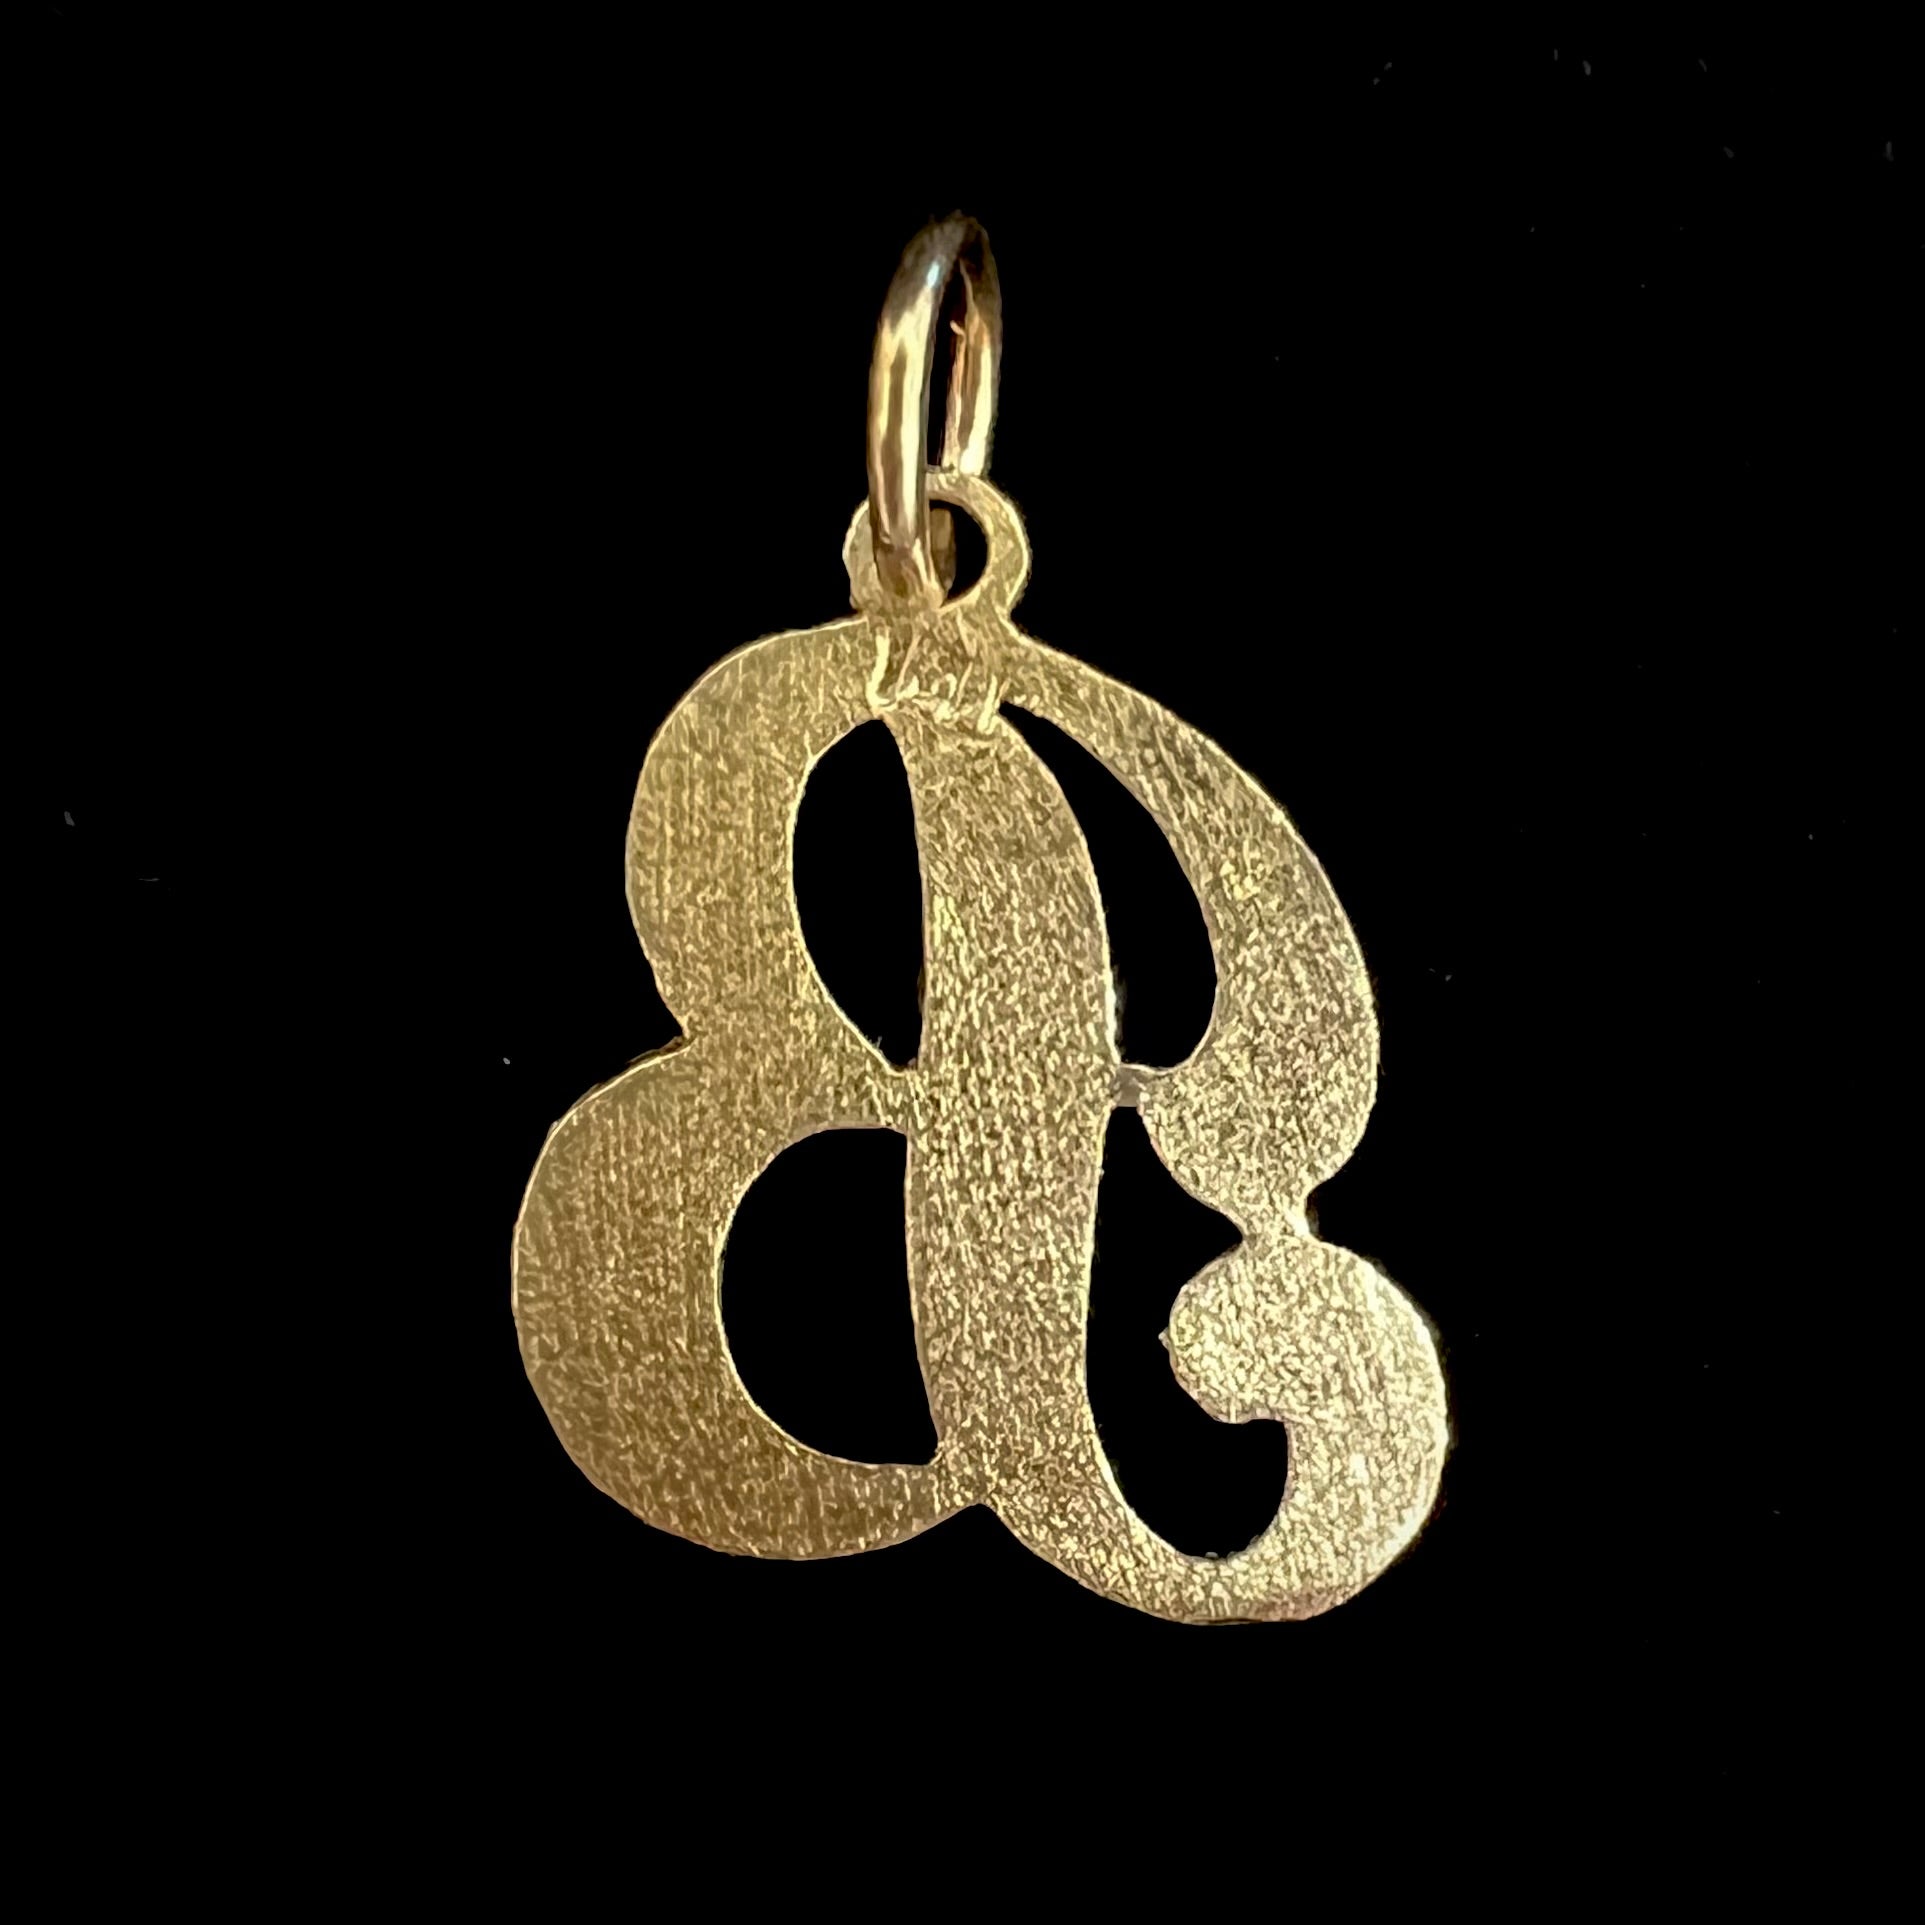 A 14 karat yellow gold stylized script letter "B" pendant, resembling the Barbie logo.